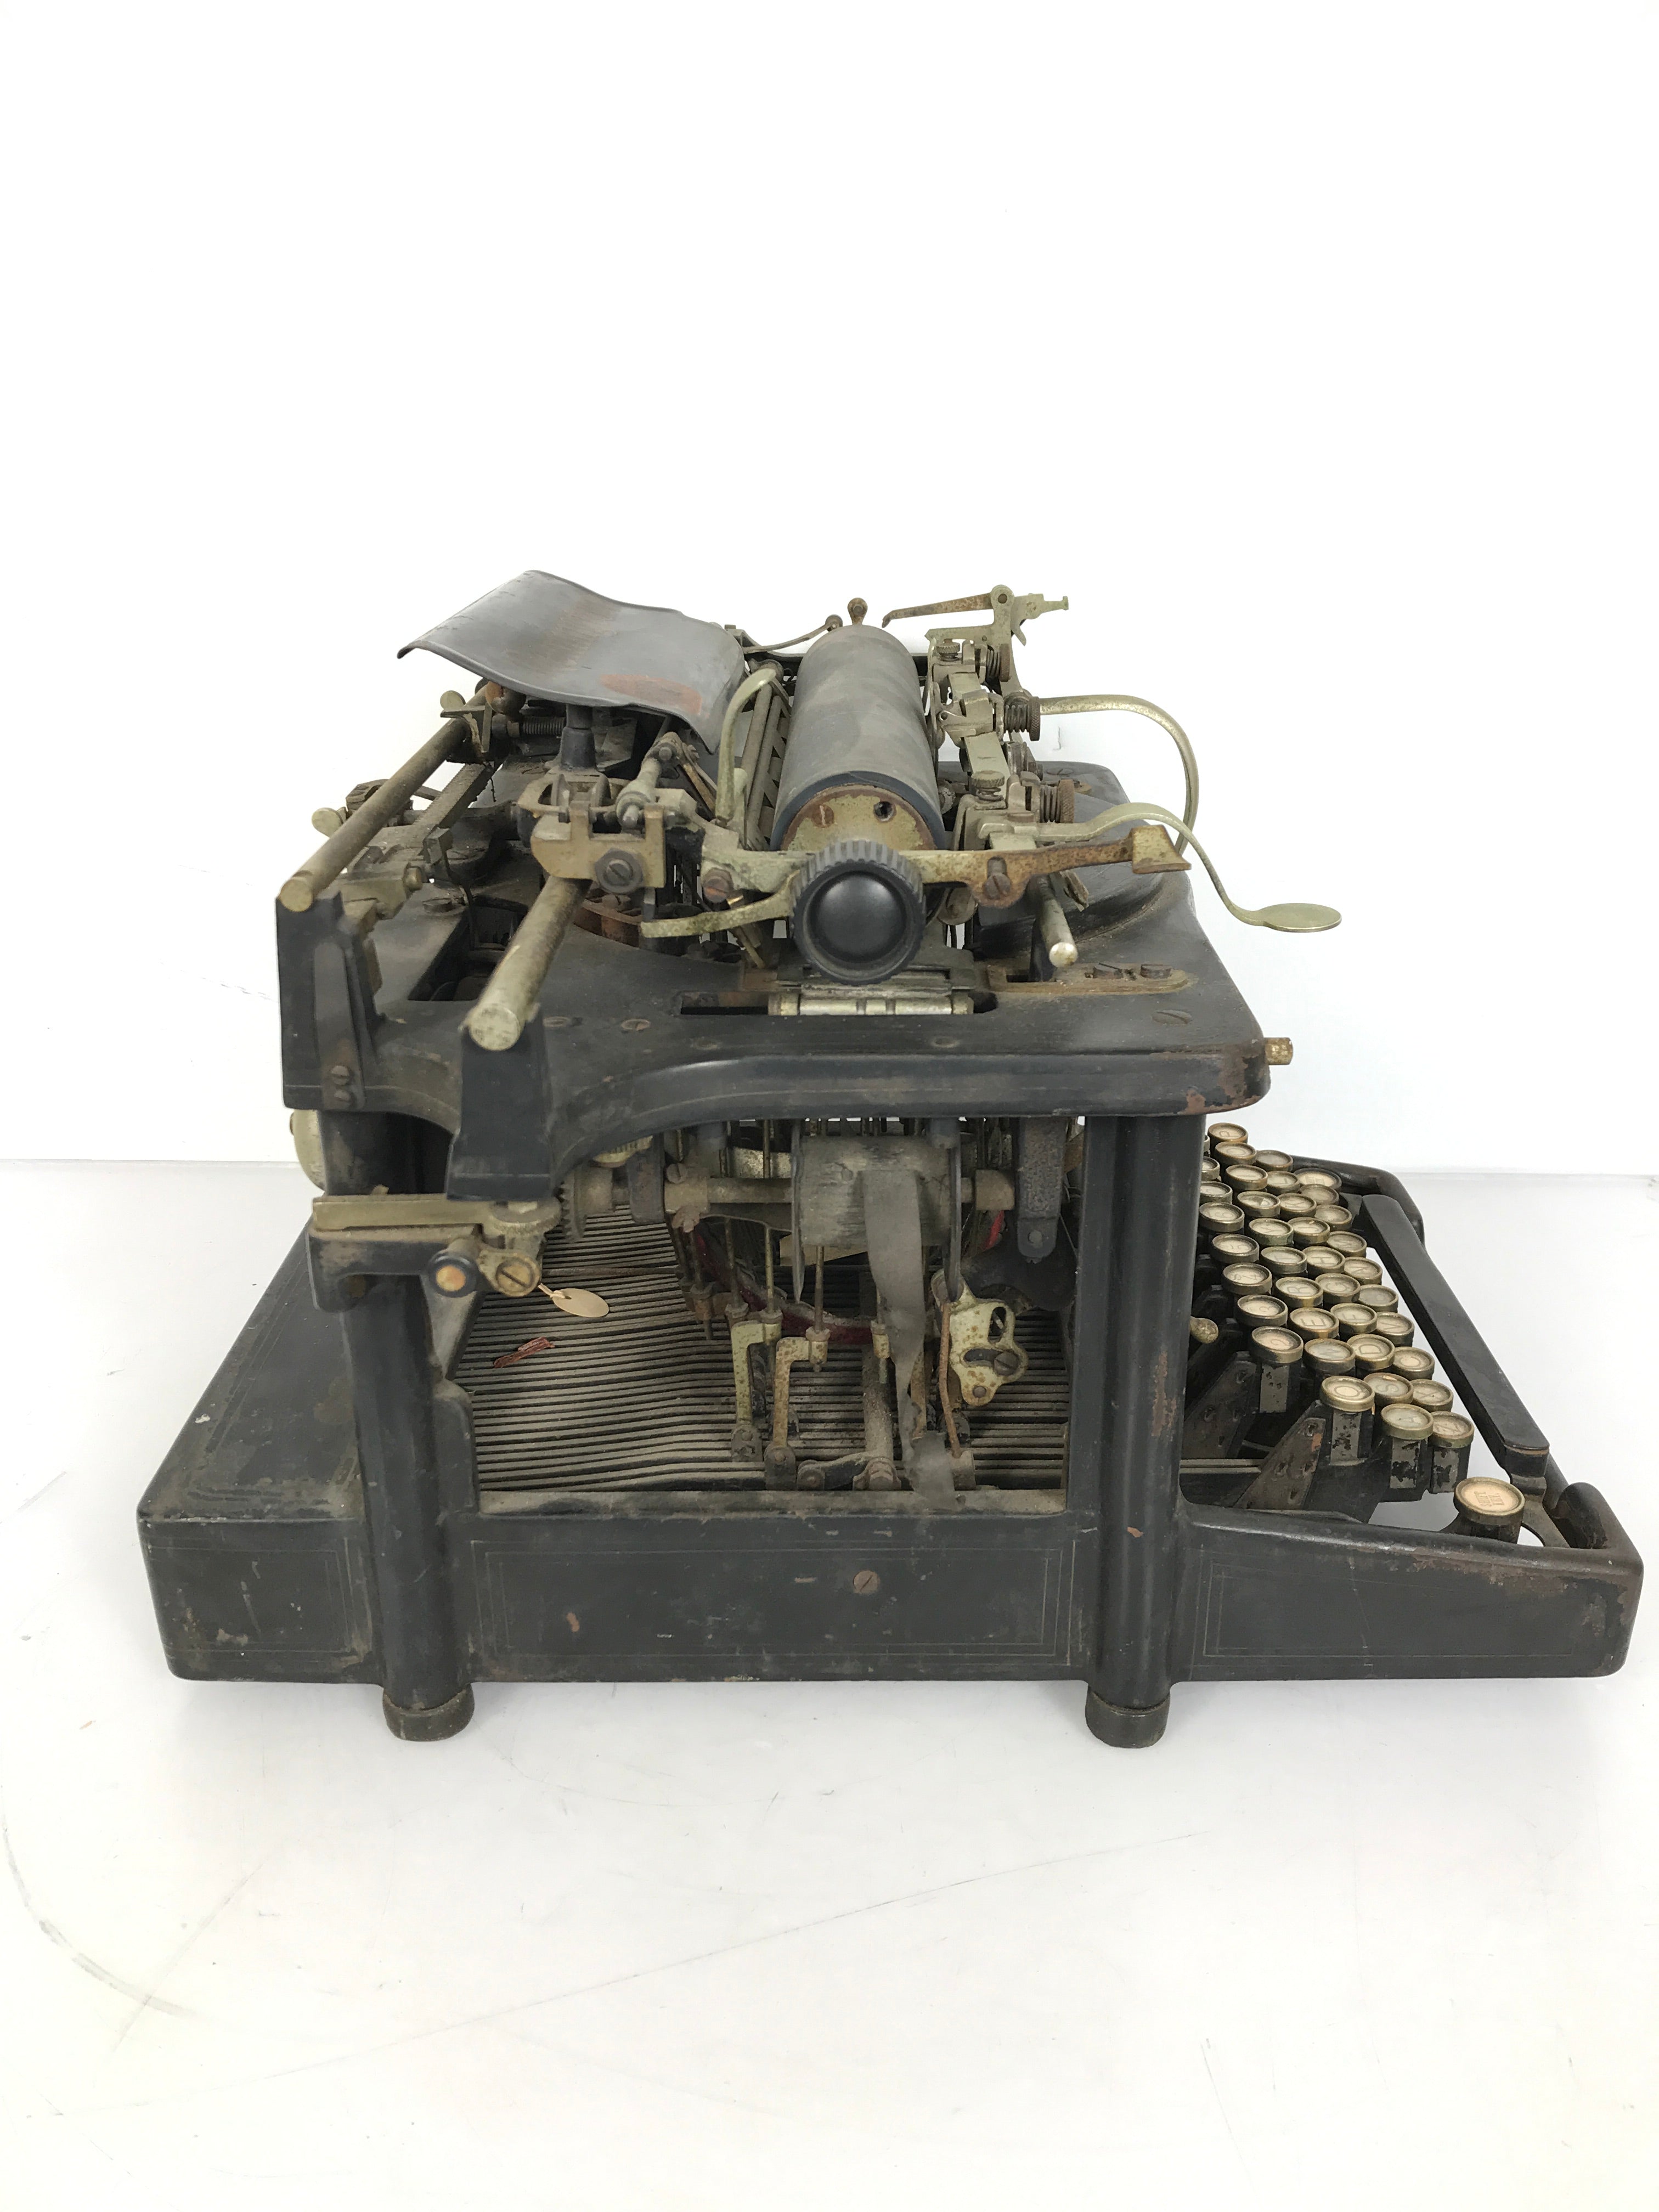 Antique 1907 Remington Standard Typewriter No. 6 *For Parts or Repair*